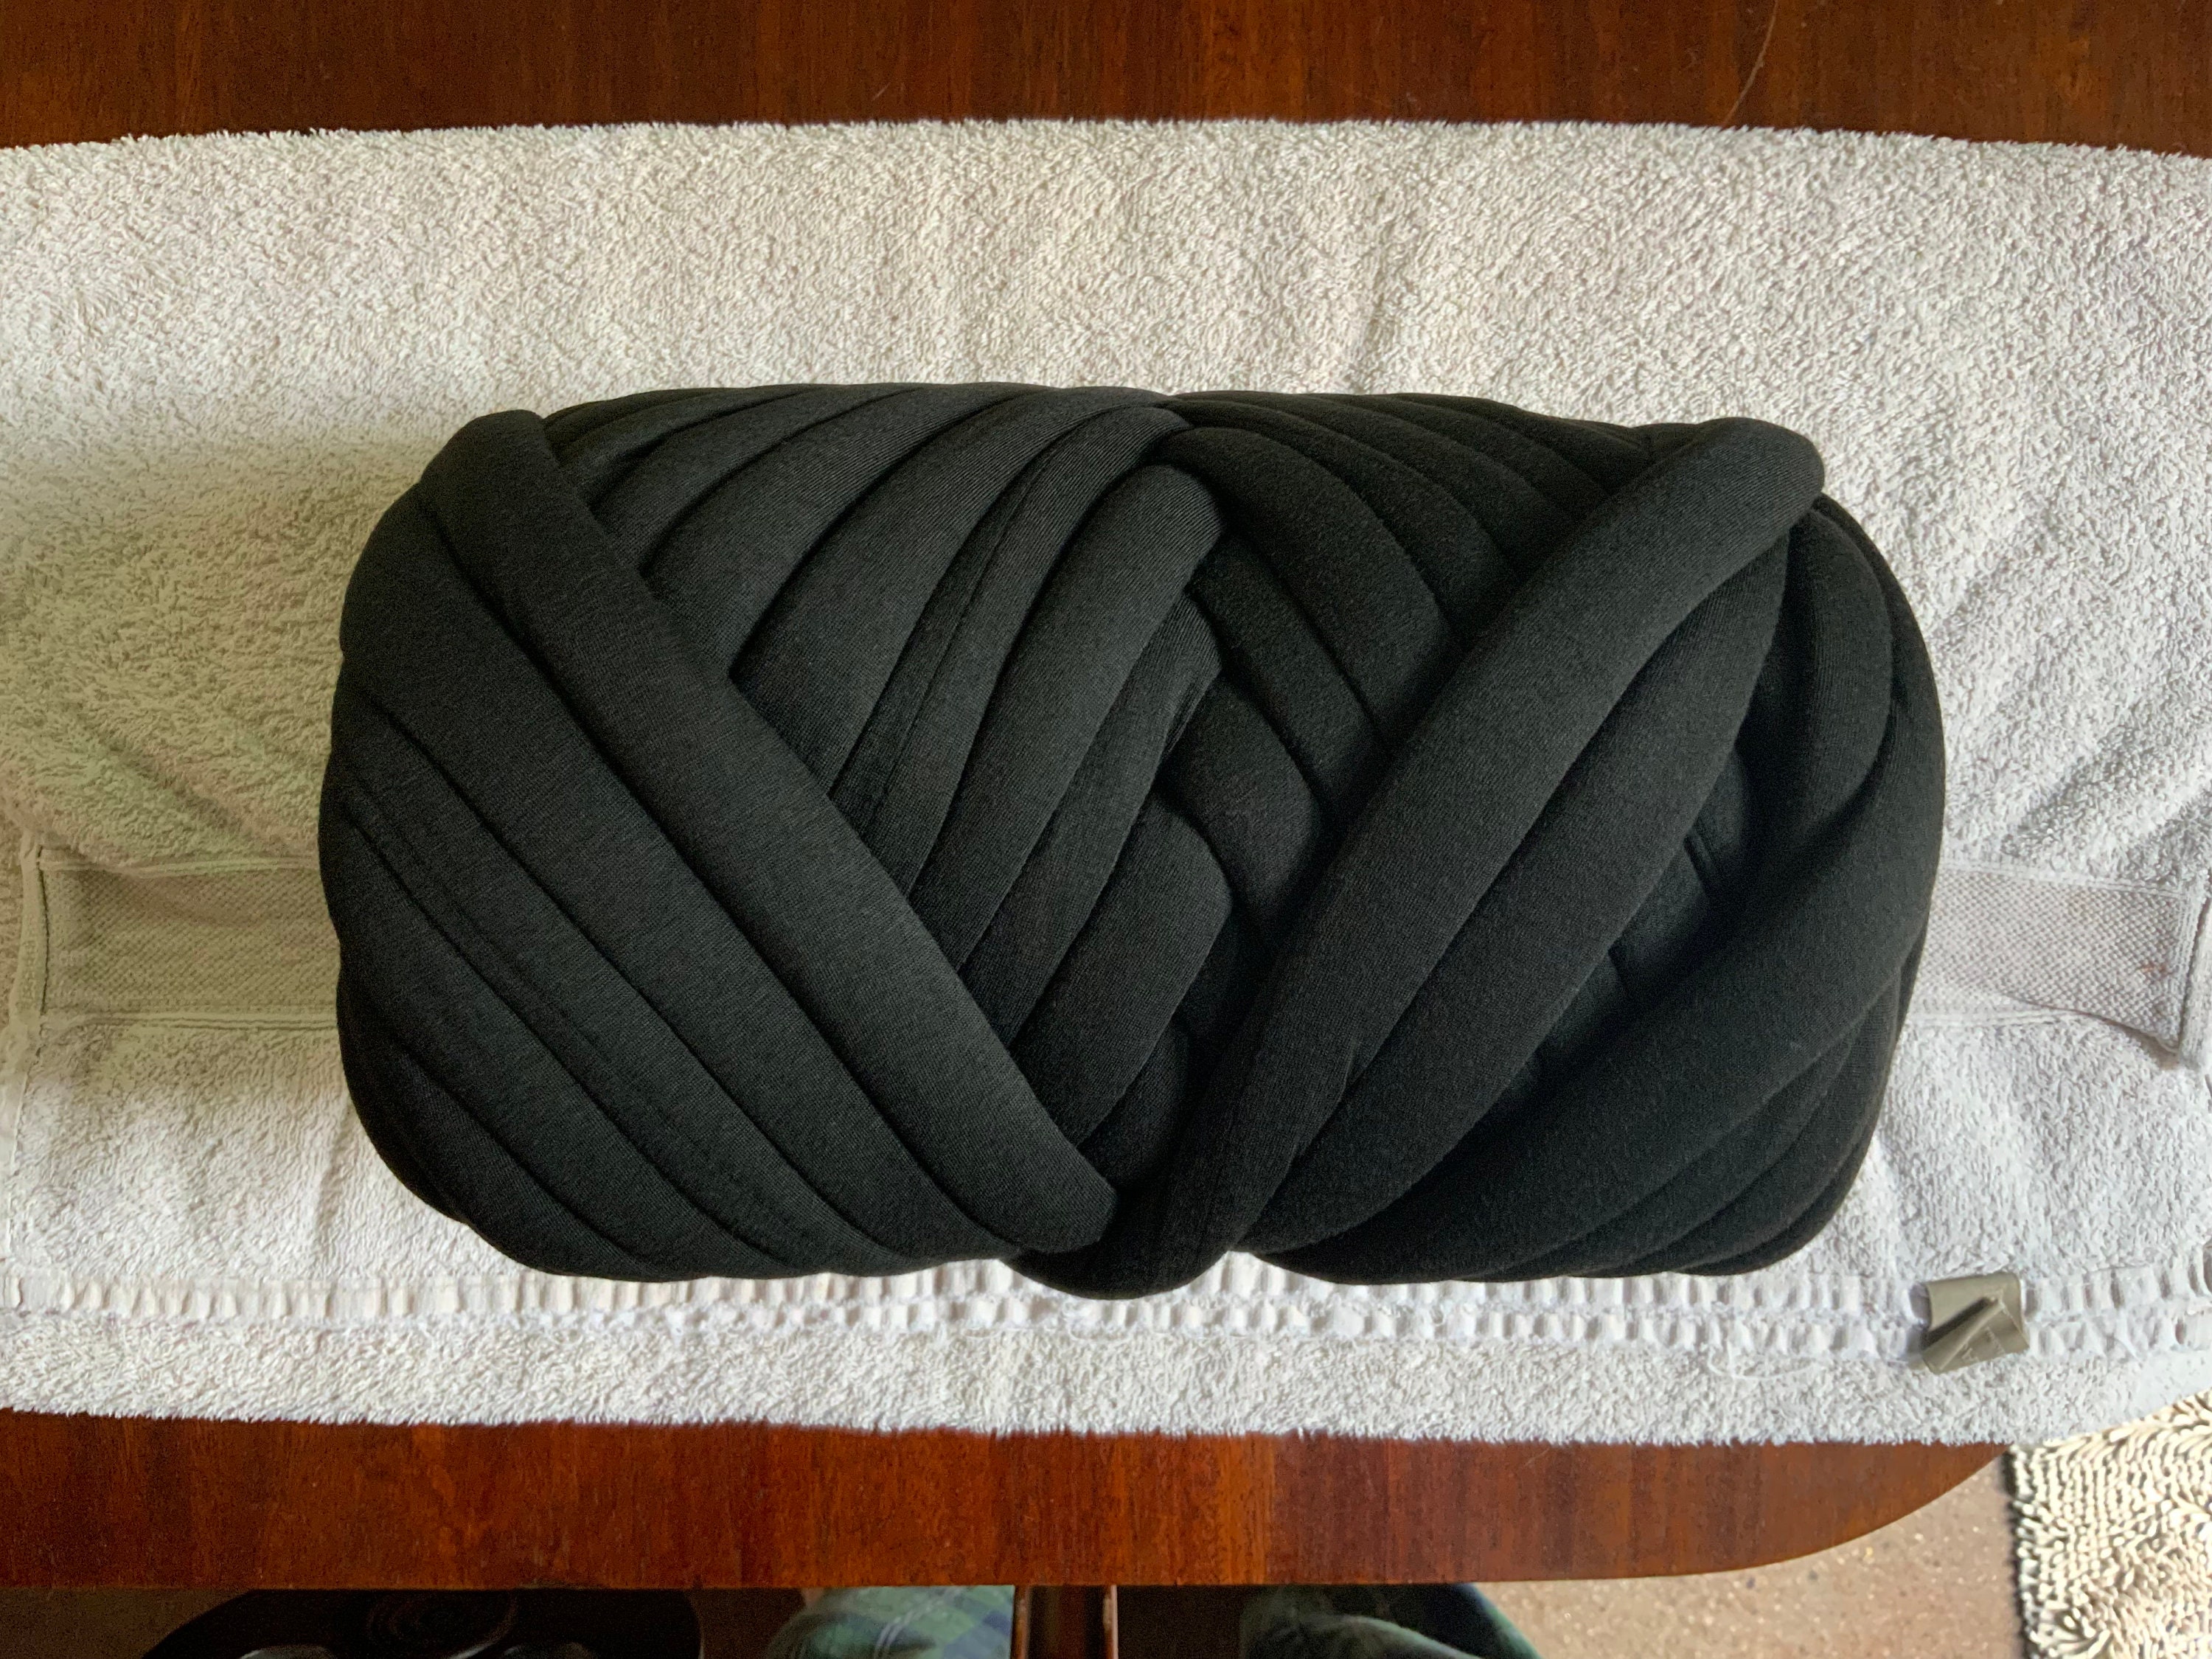 Chunky Cotton Tube Yarnfor armknitting – Panapufa